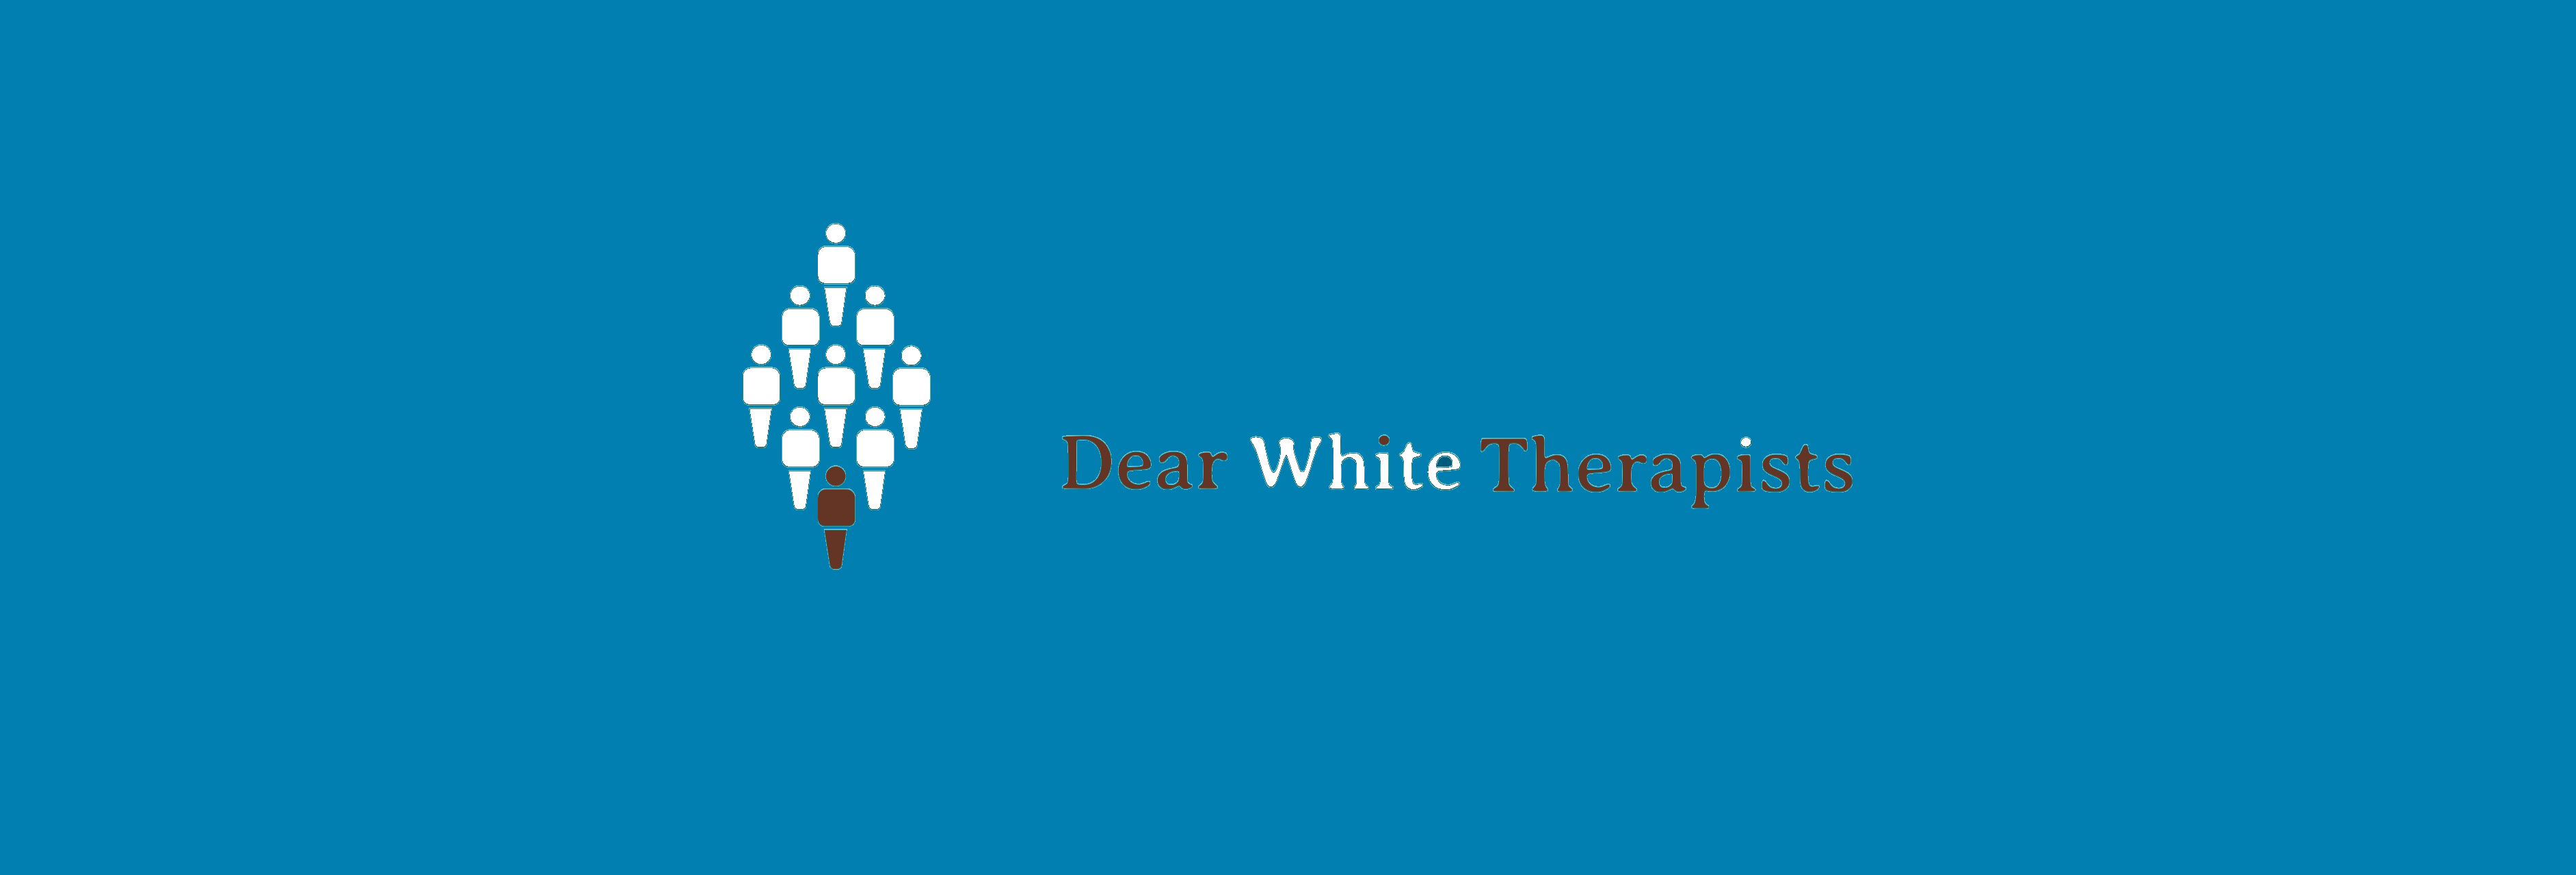 Dear White Therapists, The Honest Therapist Dr. Michelle Alvarez